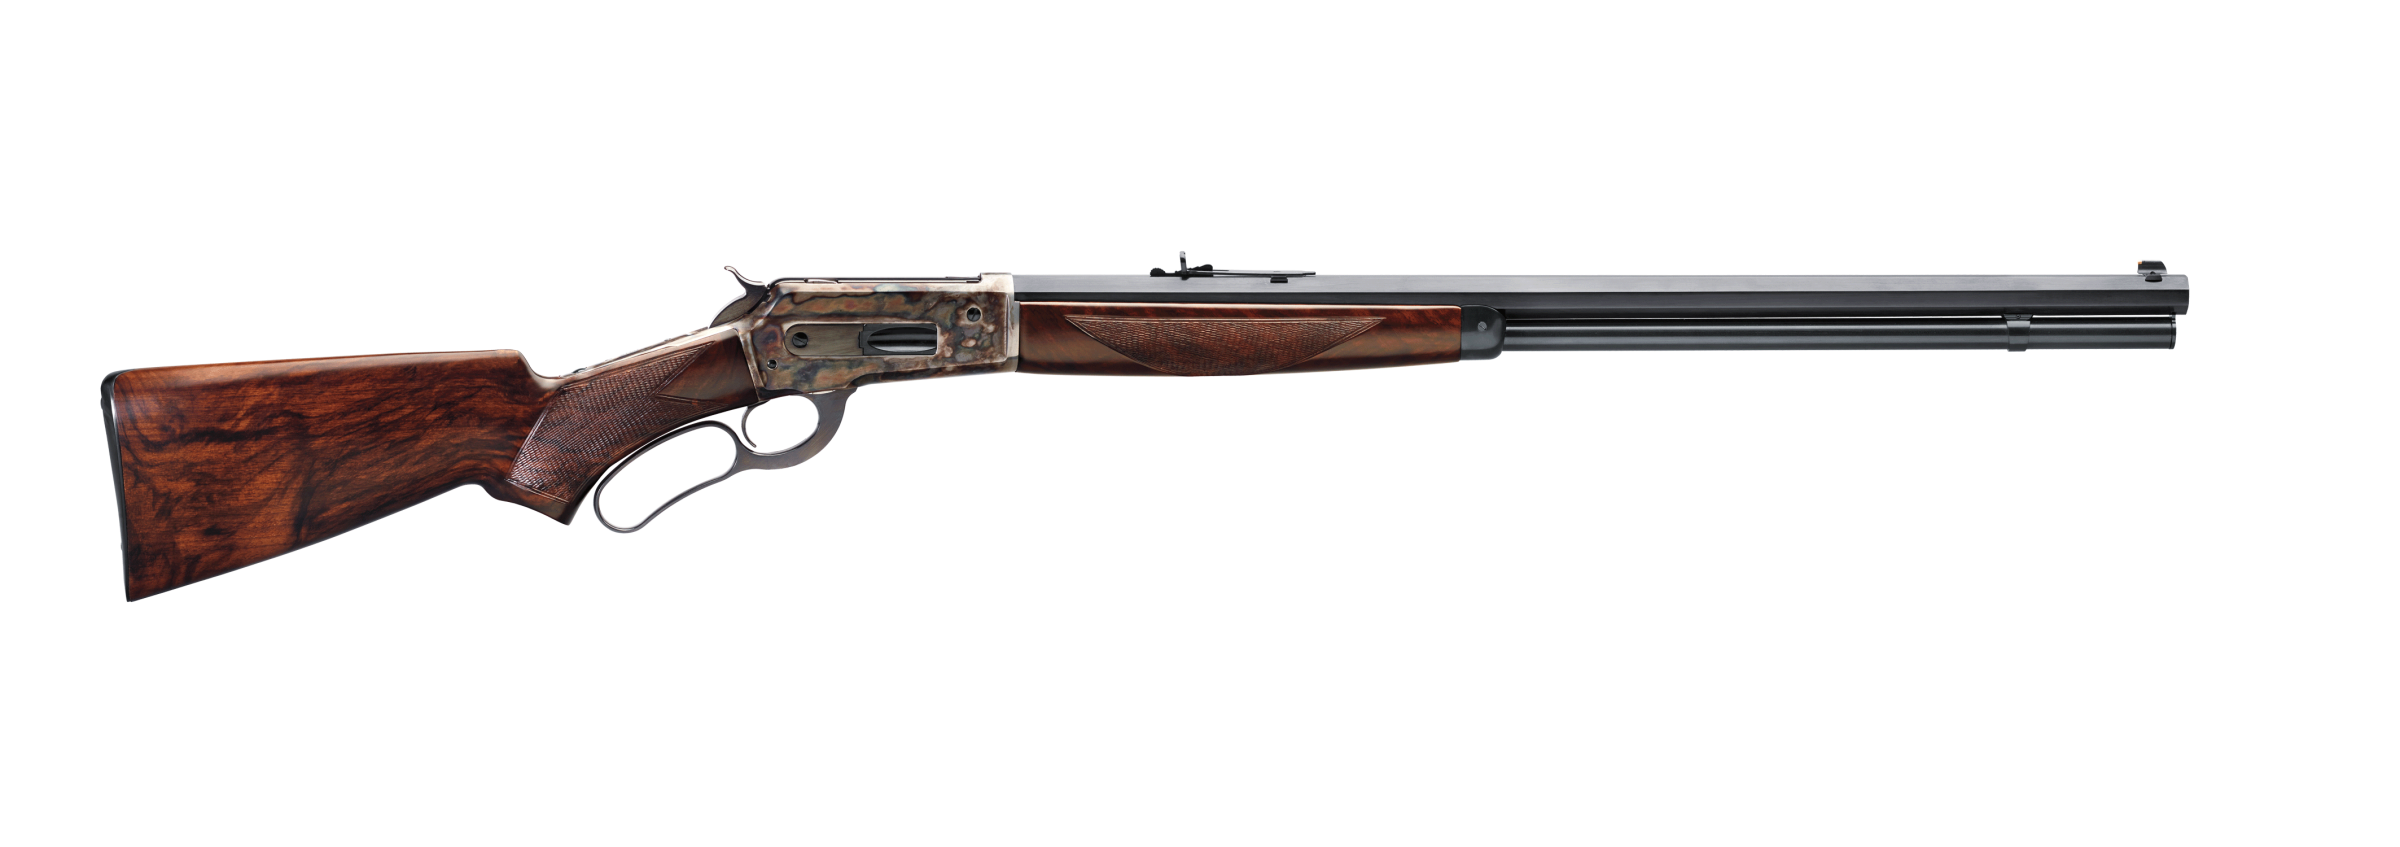 1886 Rifle | Uberti USA Replica Rifles and Revolvers